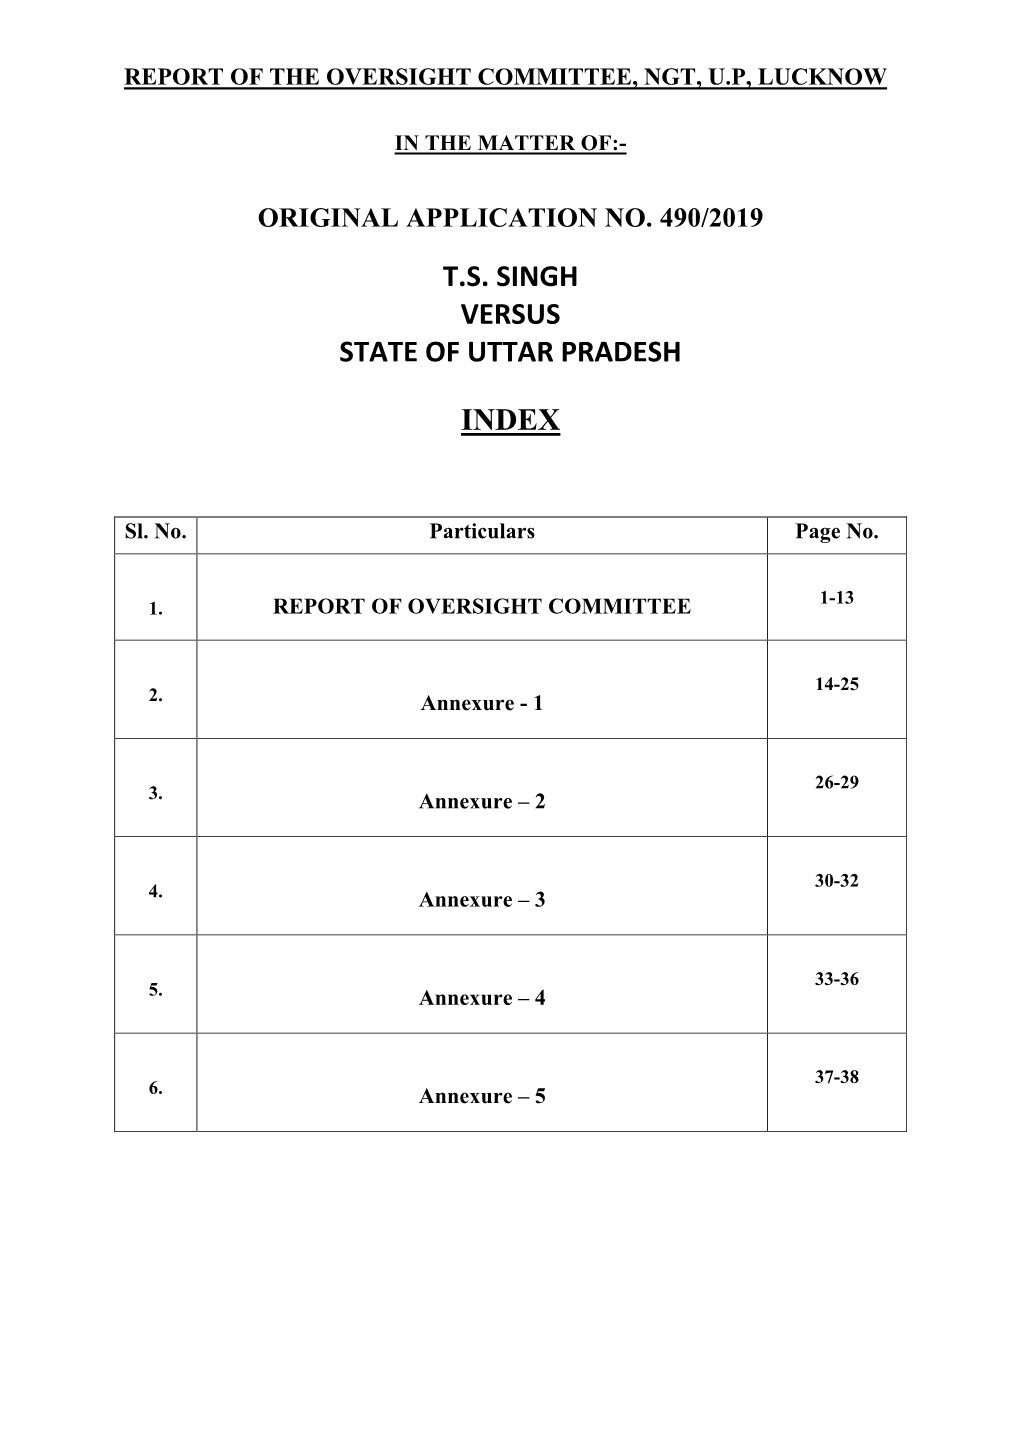 T.S. Singh Versus State of Uttar Pradesh Index